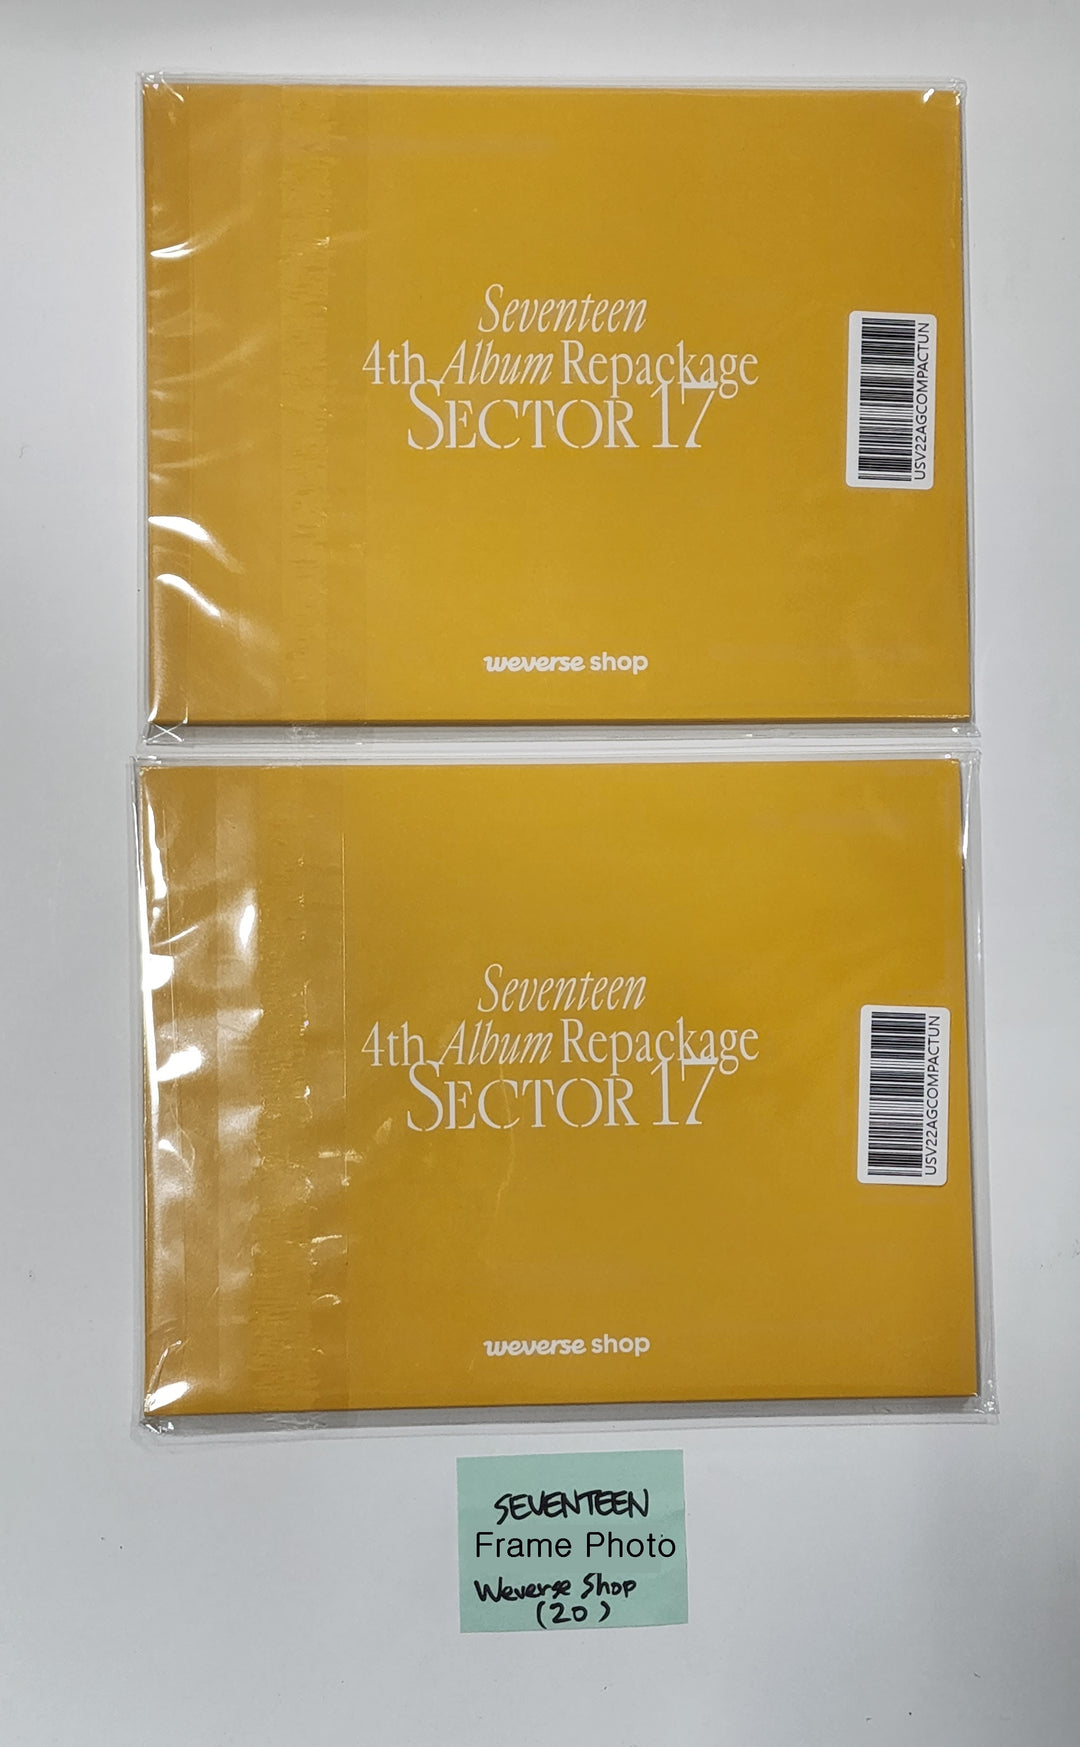 SEVENTEEN 'SECTOR 17' 4th Album リパッケージ - Weverse Shop 予約特典フレームフォトセット (2枚)